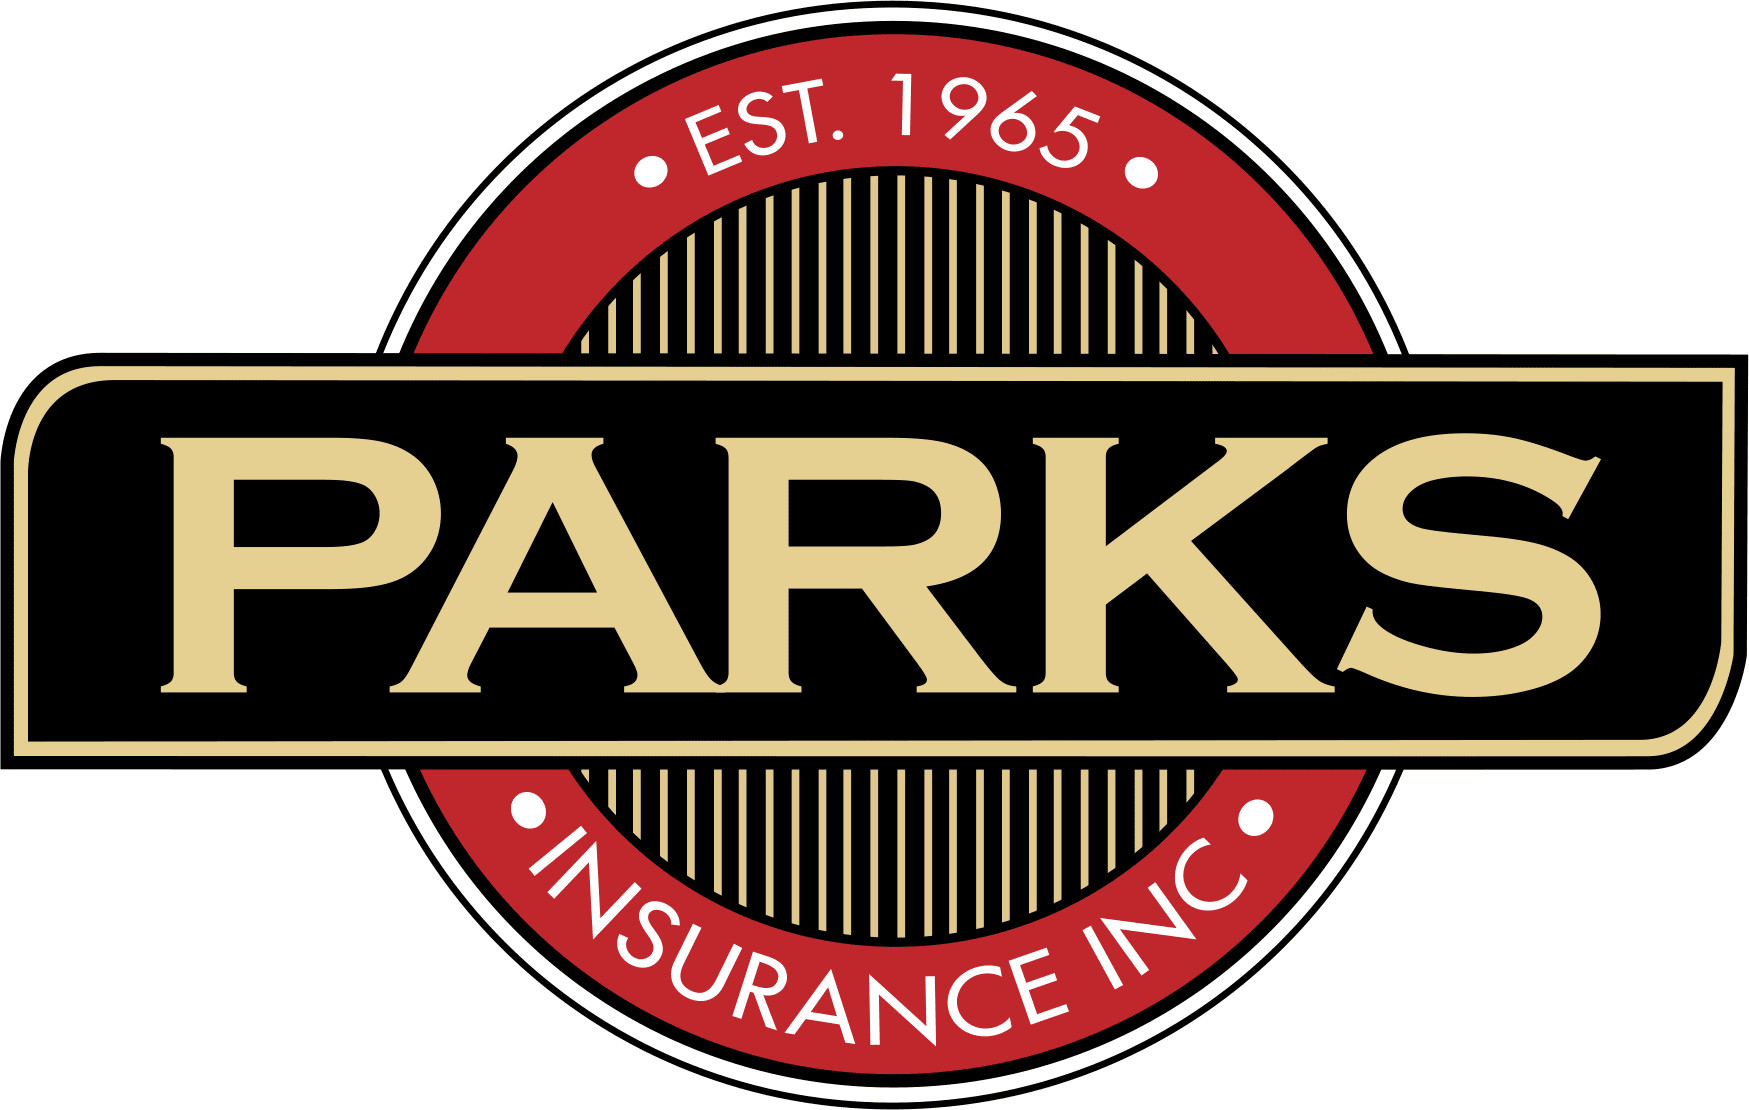 Parks Insurance Inc.